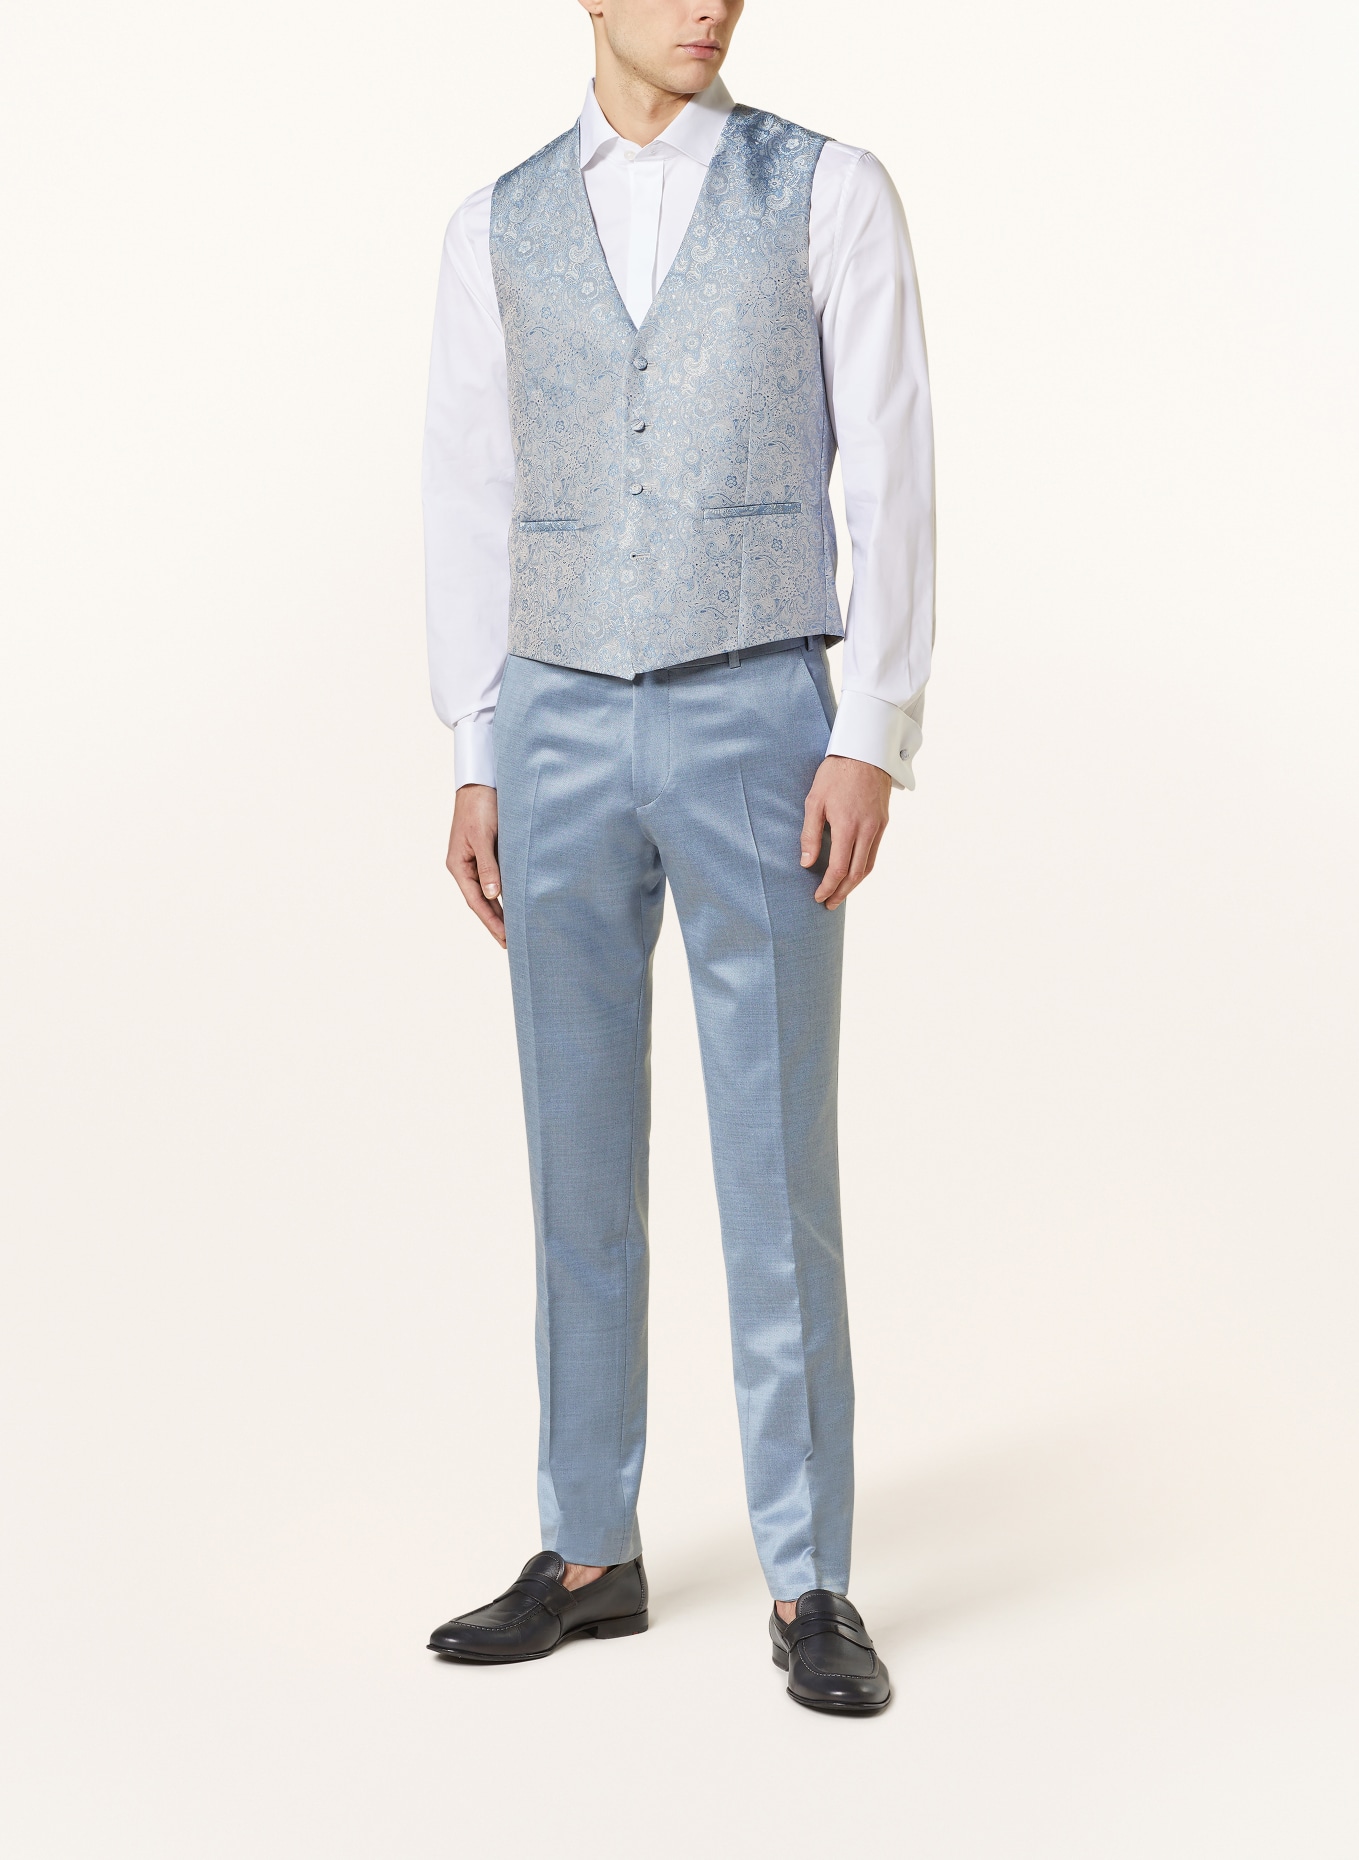 WILVORST Suit vest extra slim fit, Color: LIGHT BLUE (Image 2)